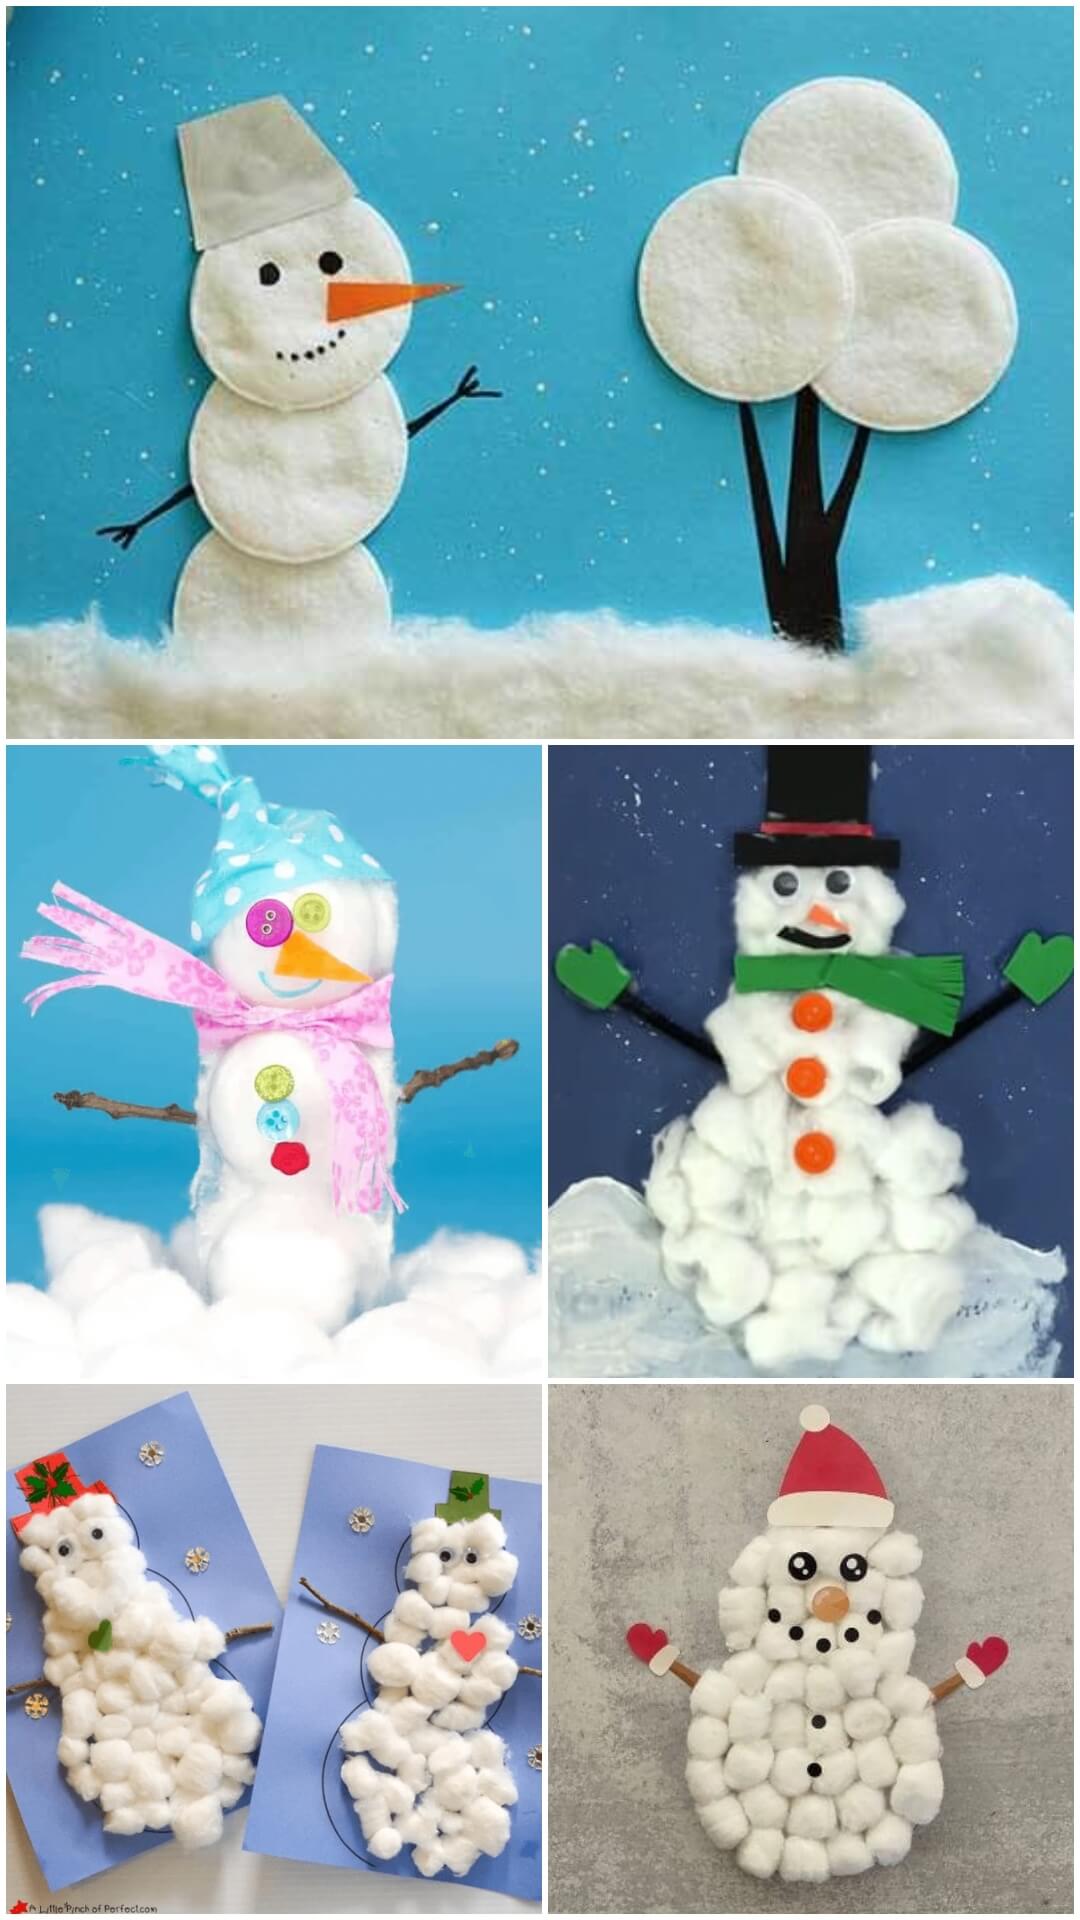  Snowman Craft With Cotton Balls